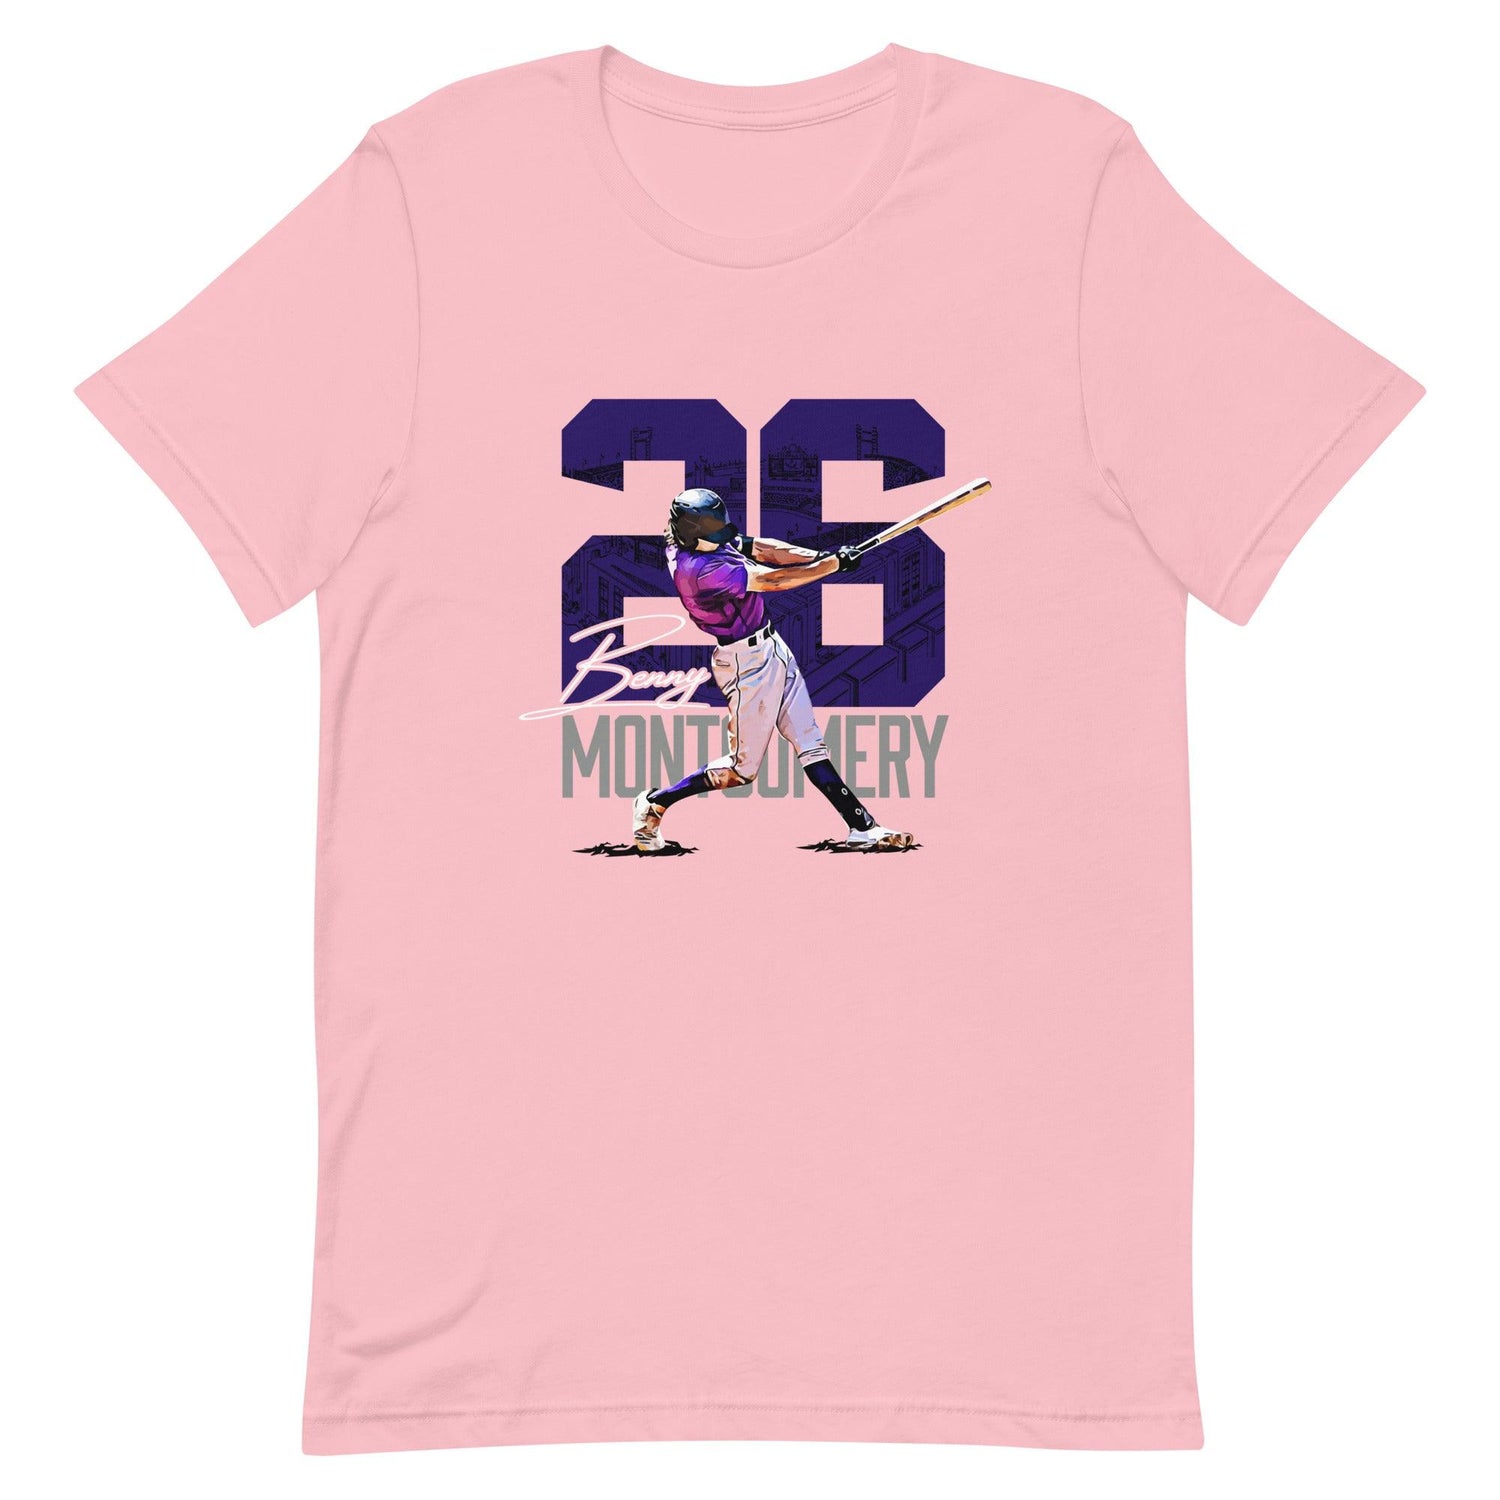 Benny Montgomery "Gameday" t-shirt - Fan Arch